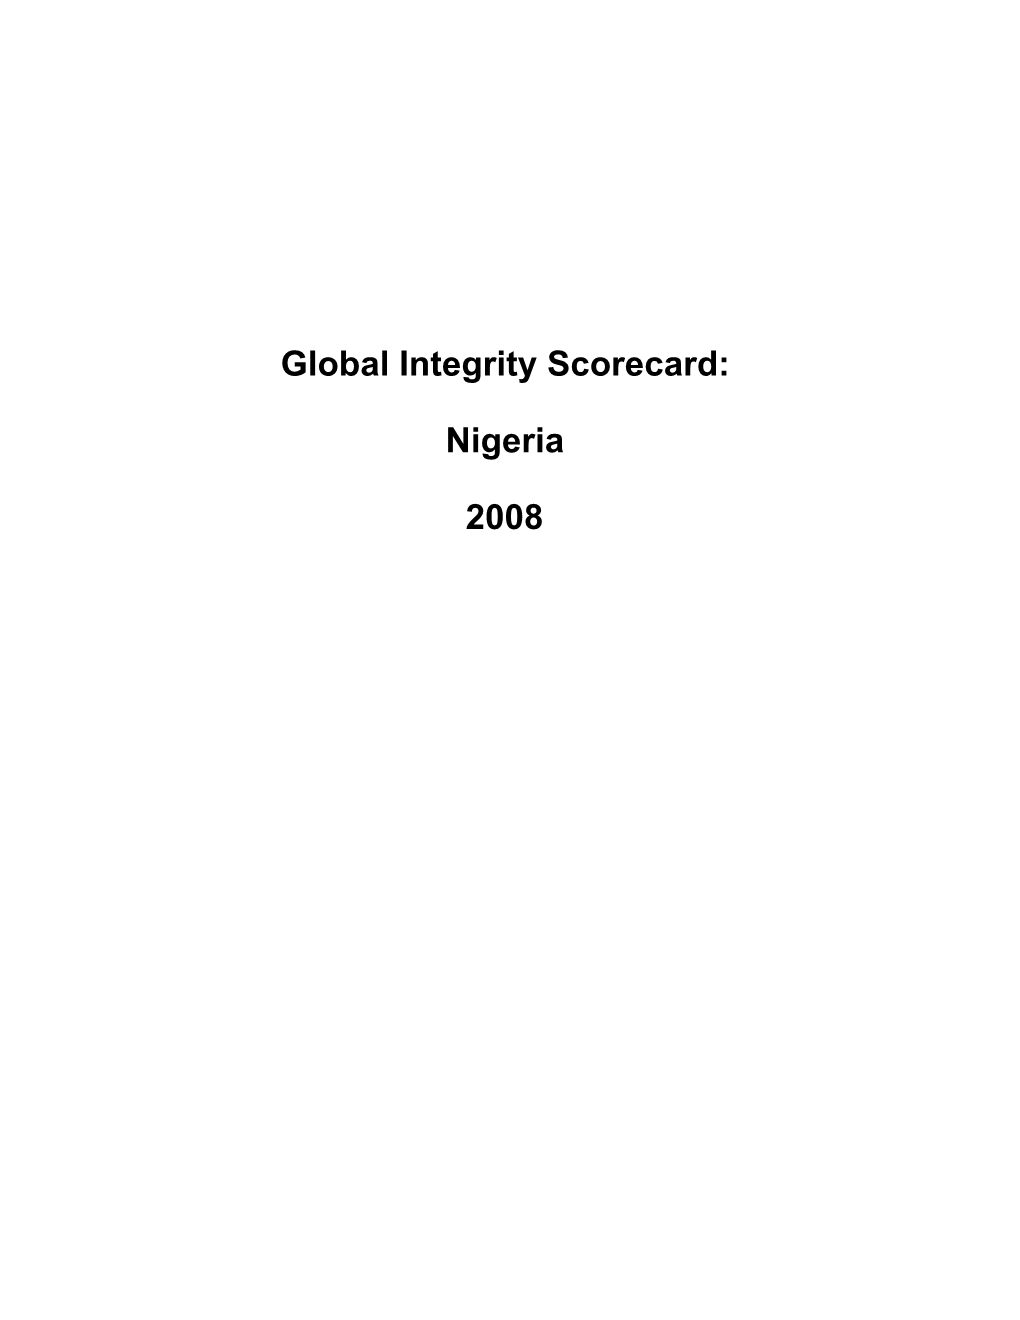 Global Integrity Scorecard: Nigeria 2008